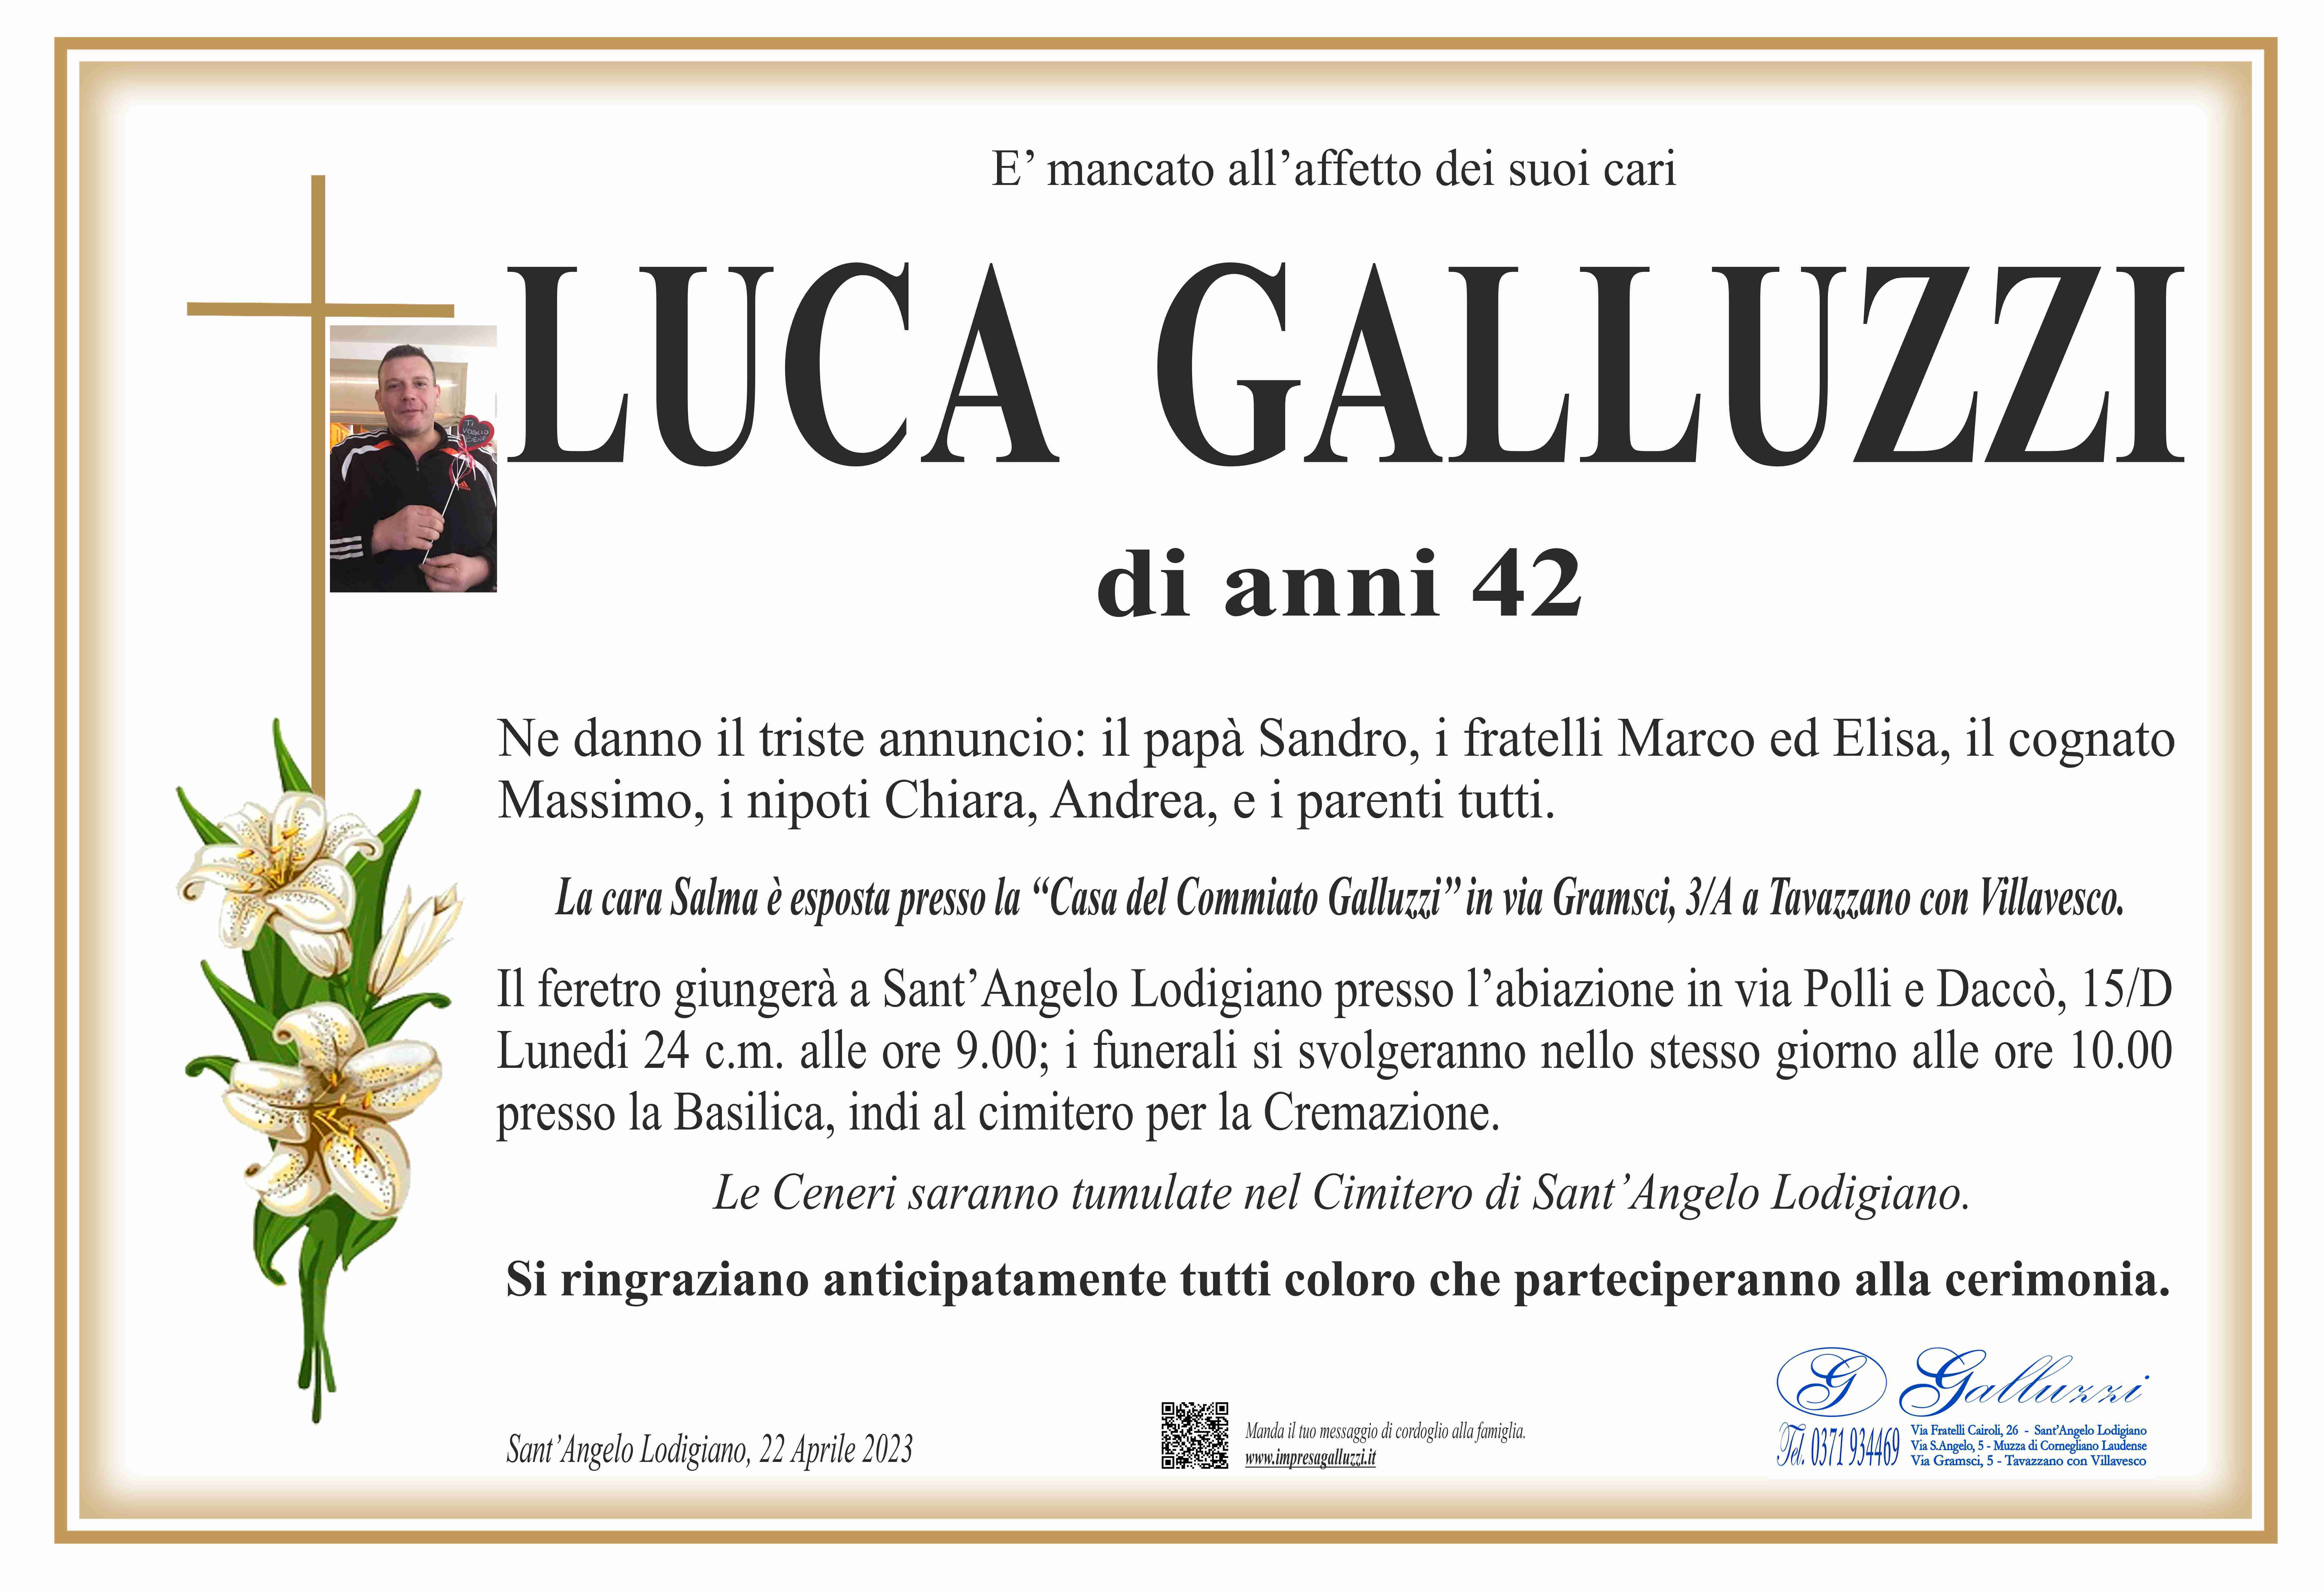 Luca Galluzzi